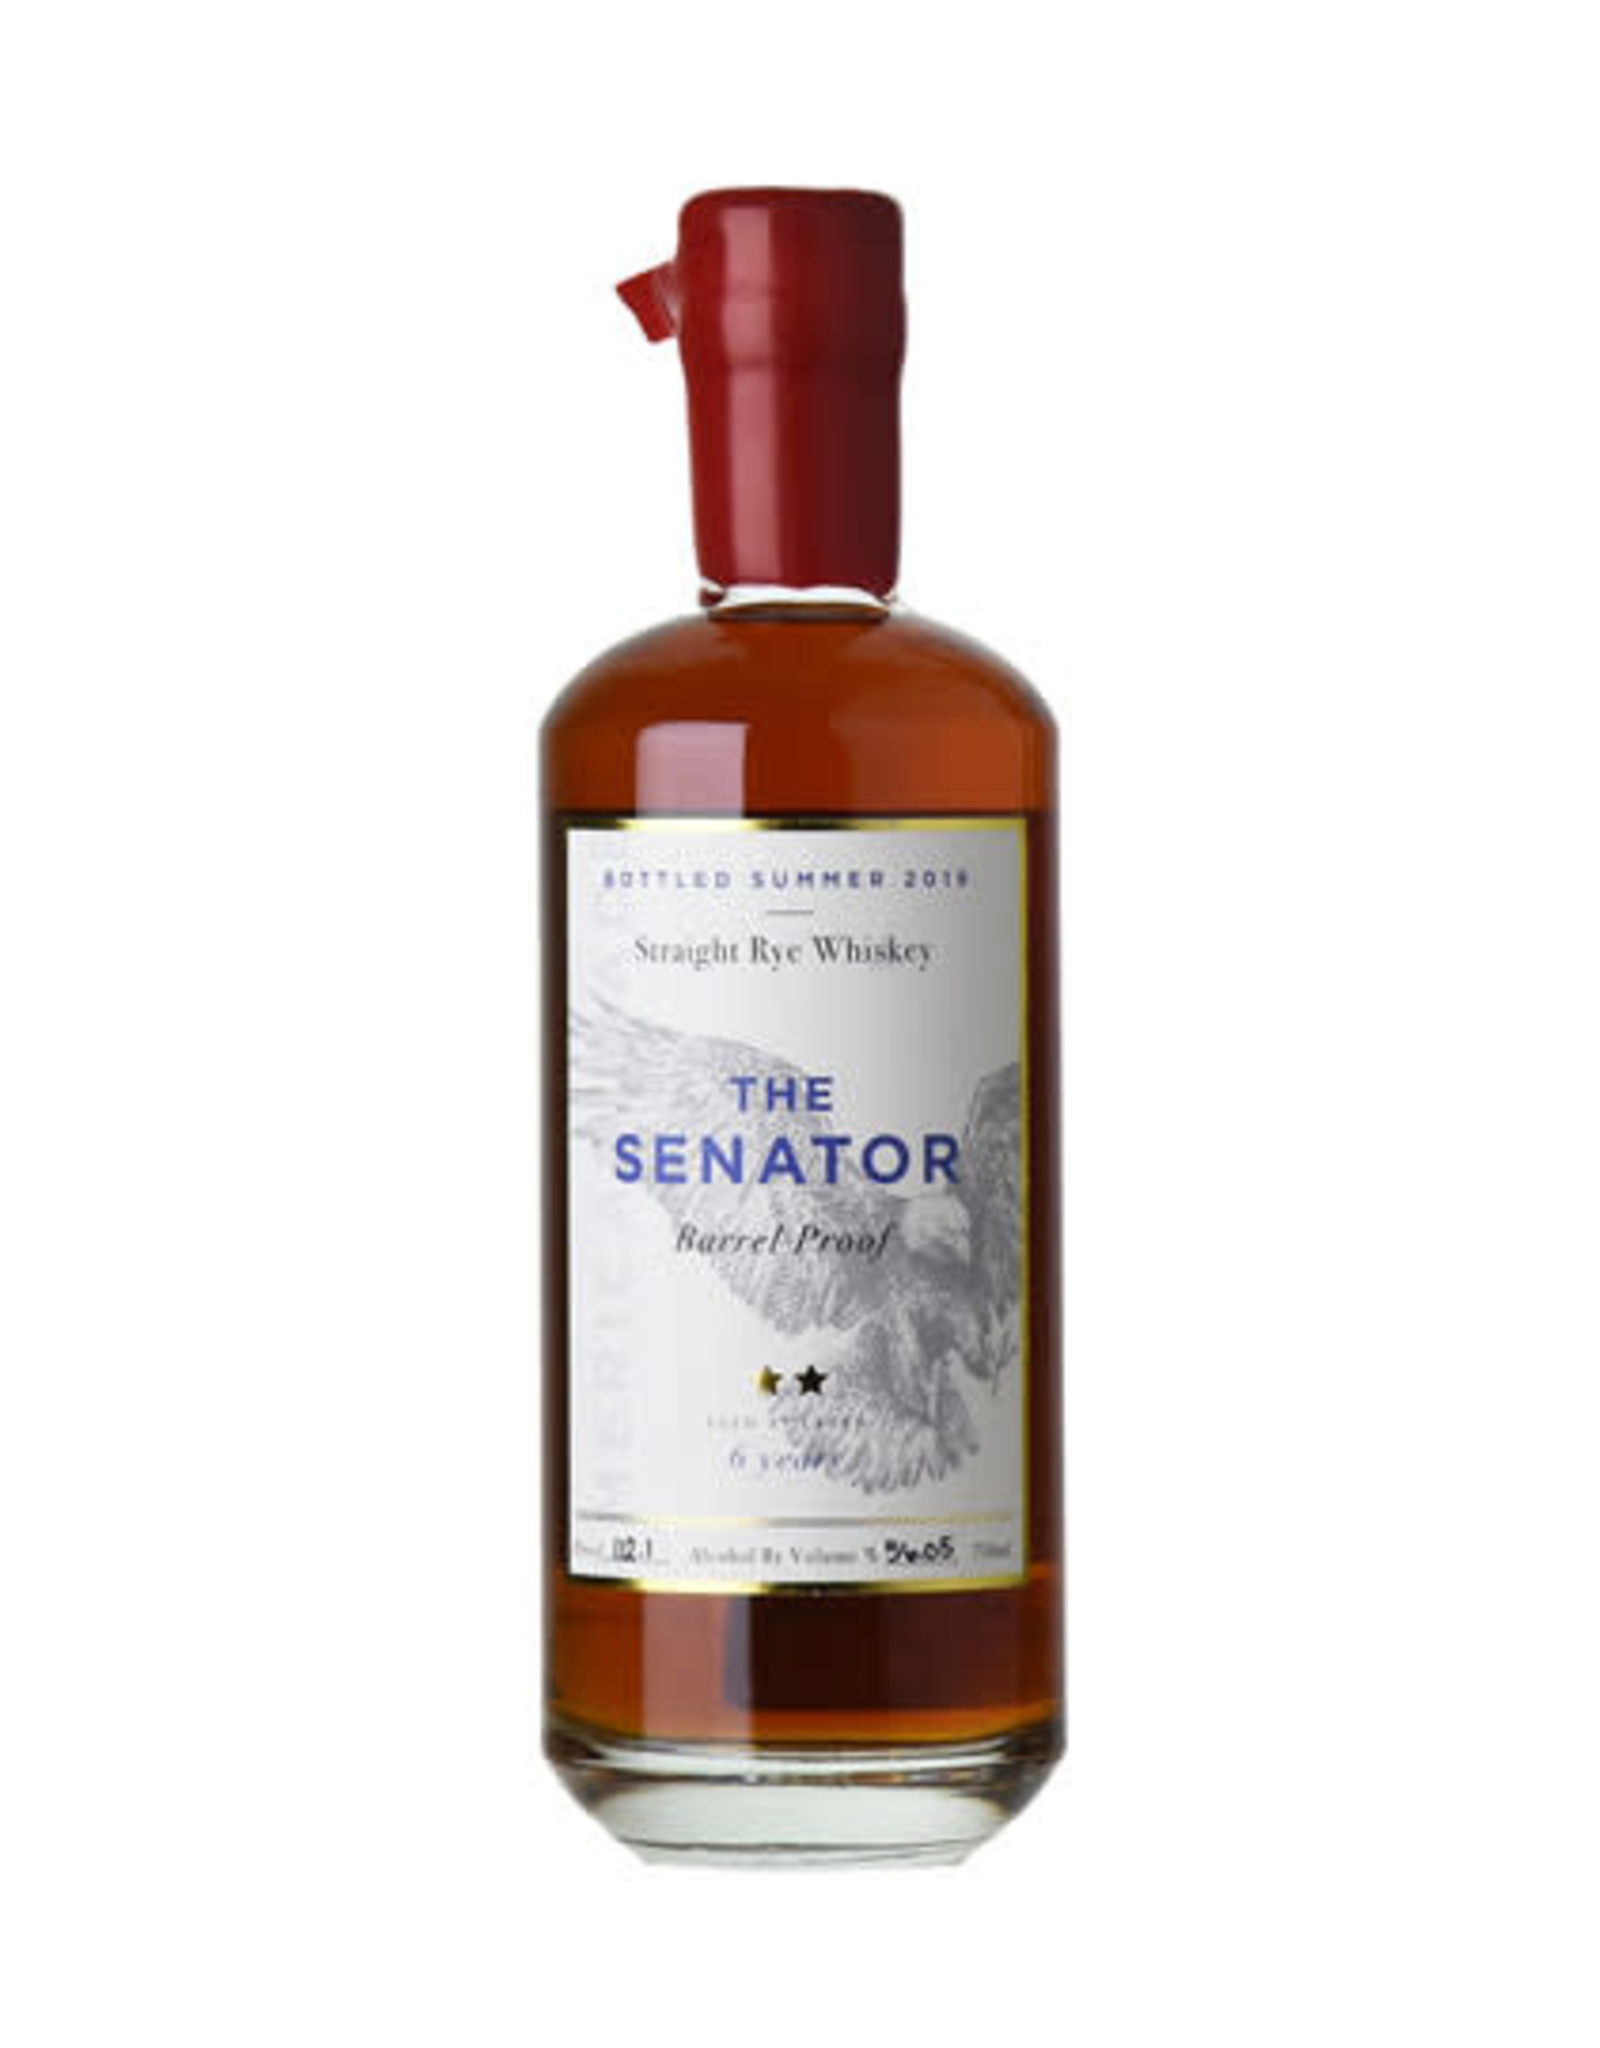 The Senator Barrel Proof Straight Rye Whiskey